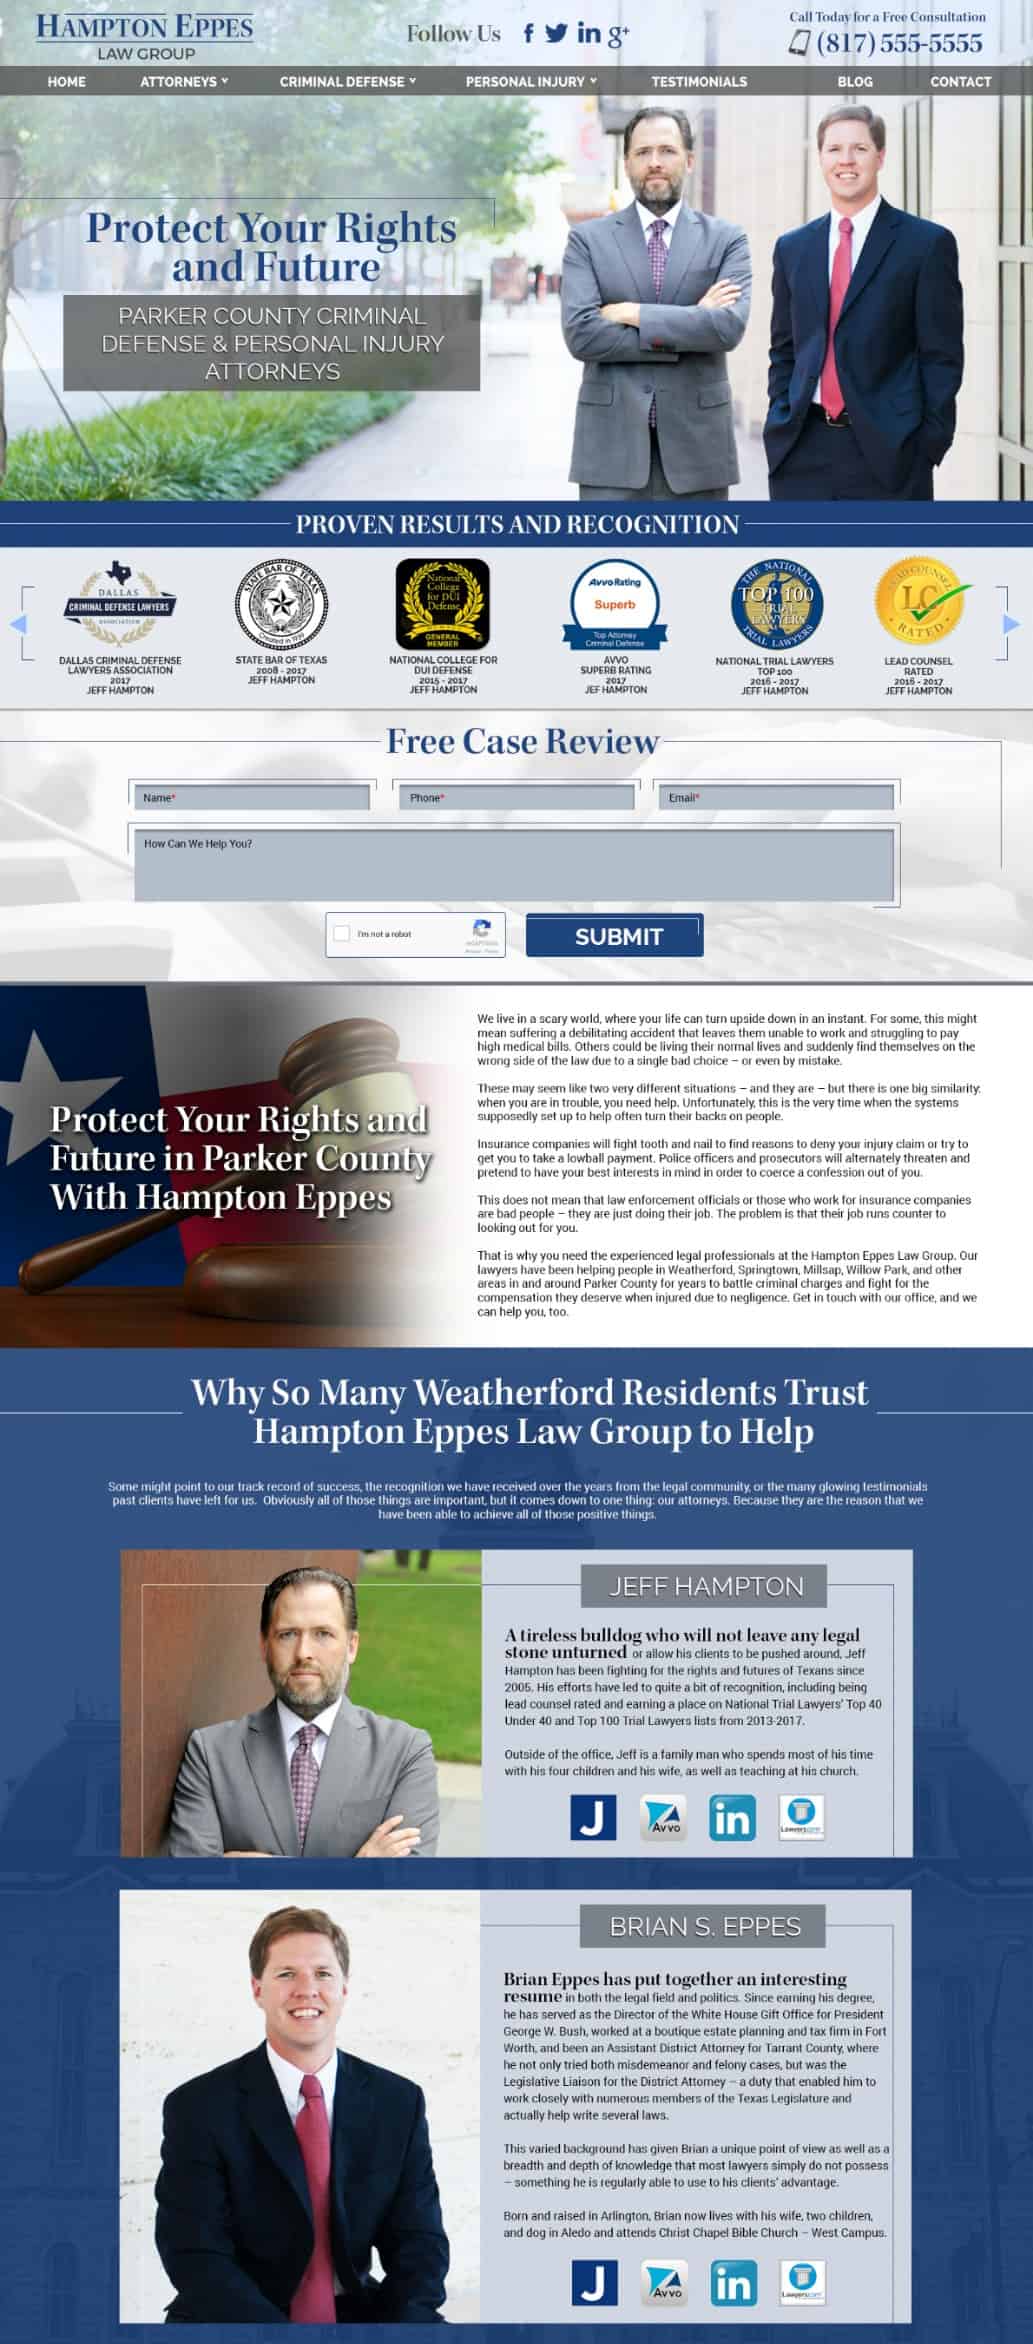 Hampton Eppes Law Group